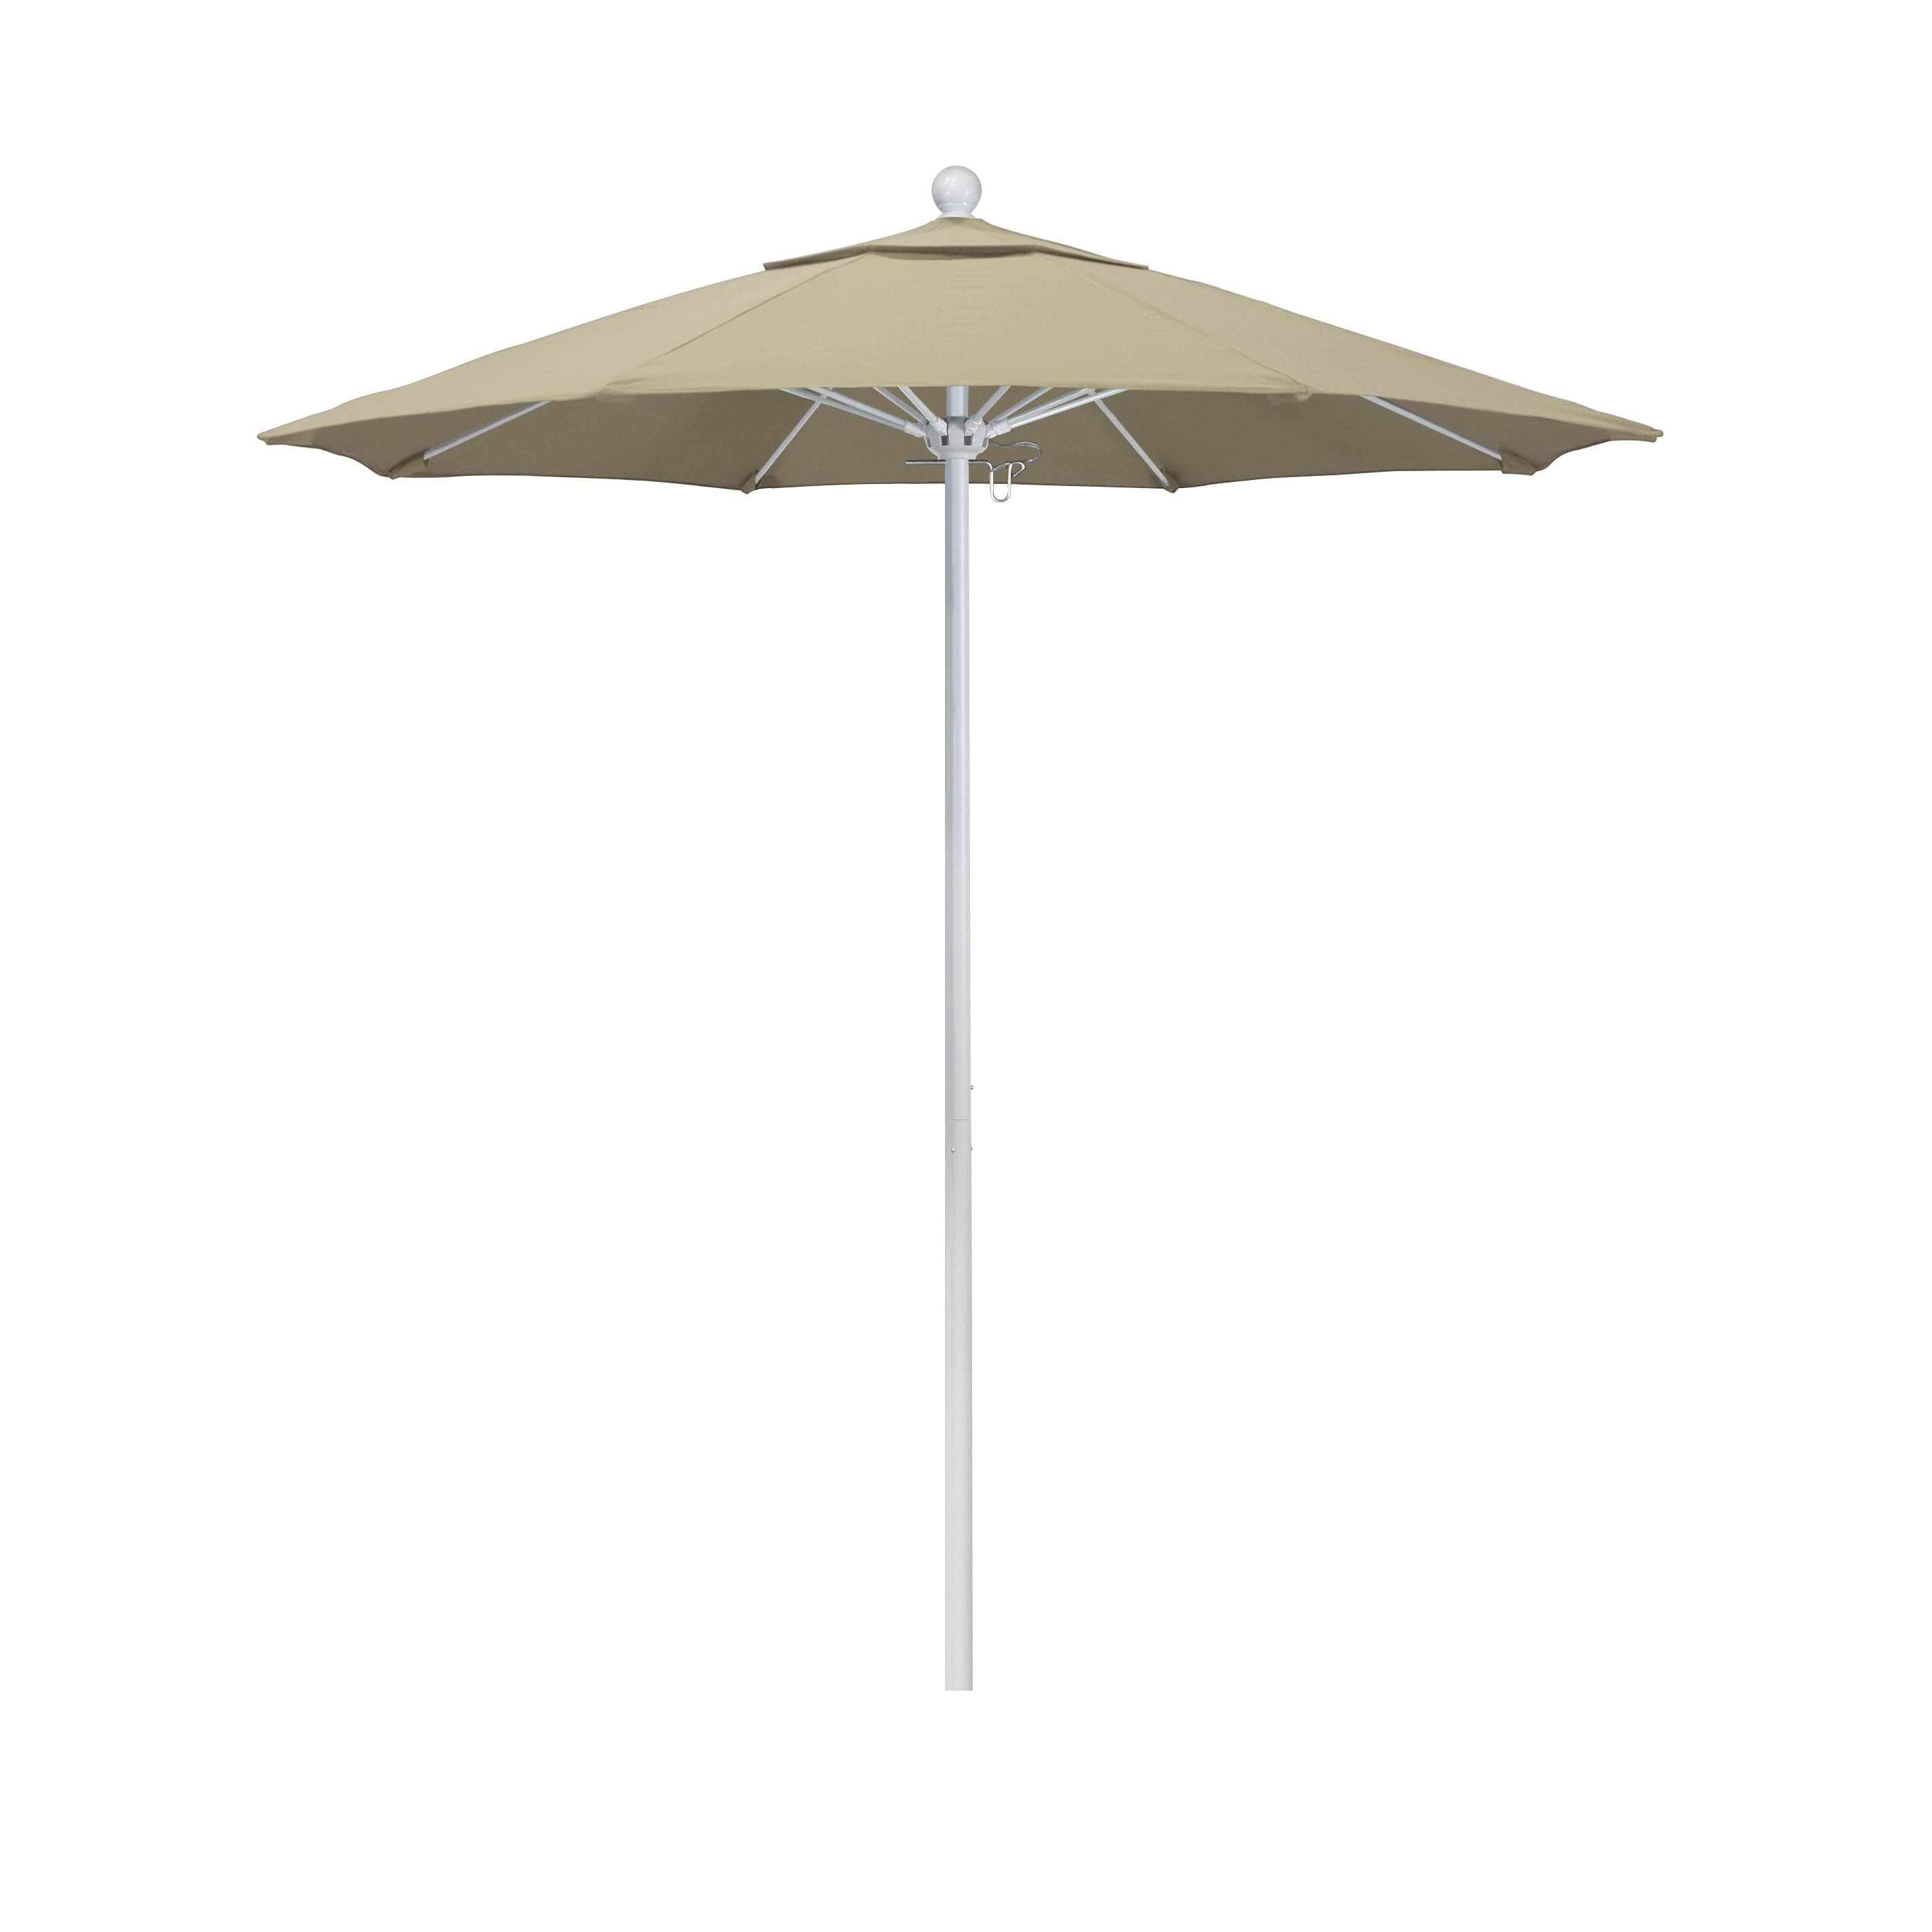 Alto758170-5422 7.5 Ft. Fiberglass Pulley Open Market Umbrella - Matted White And Sunbrella-antique Beige